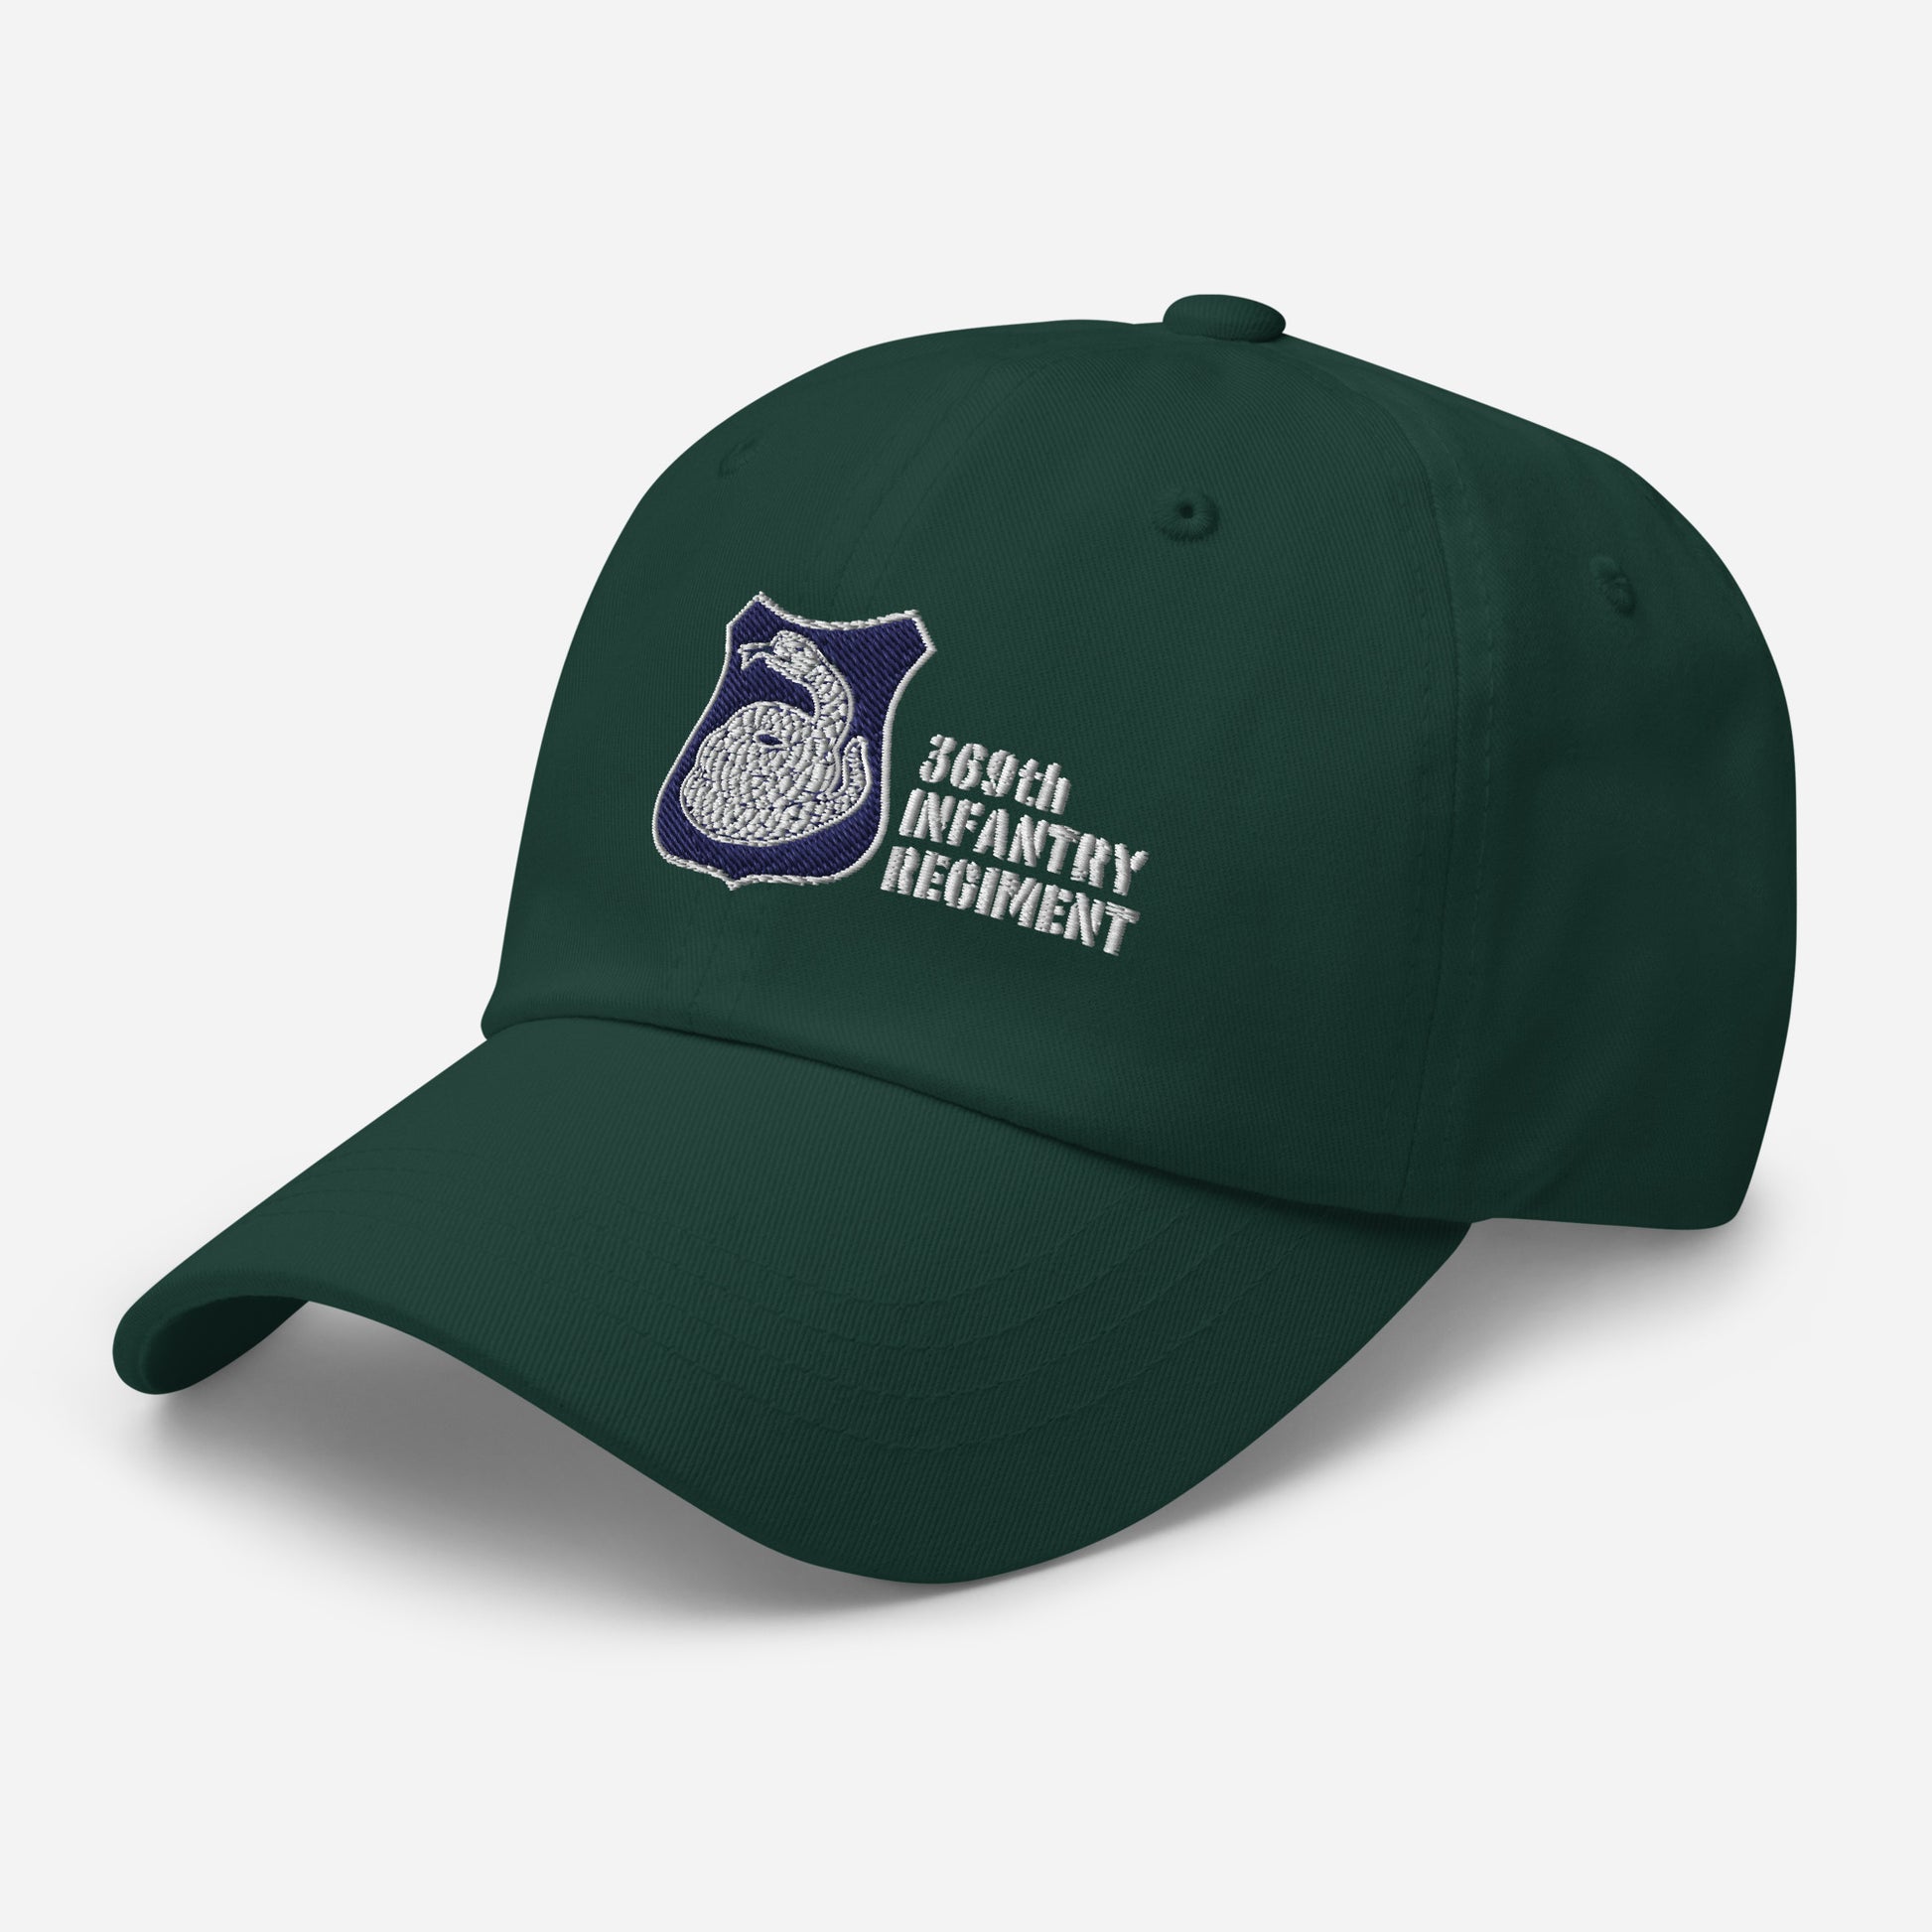 green hat with harlem hellfighters rattlesnake emblem reading 369th infantry regiment